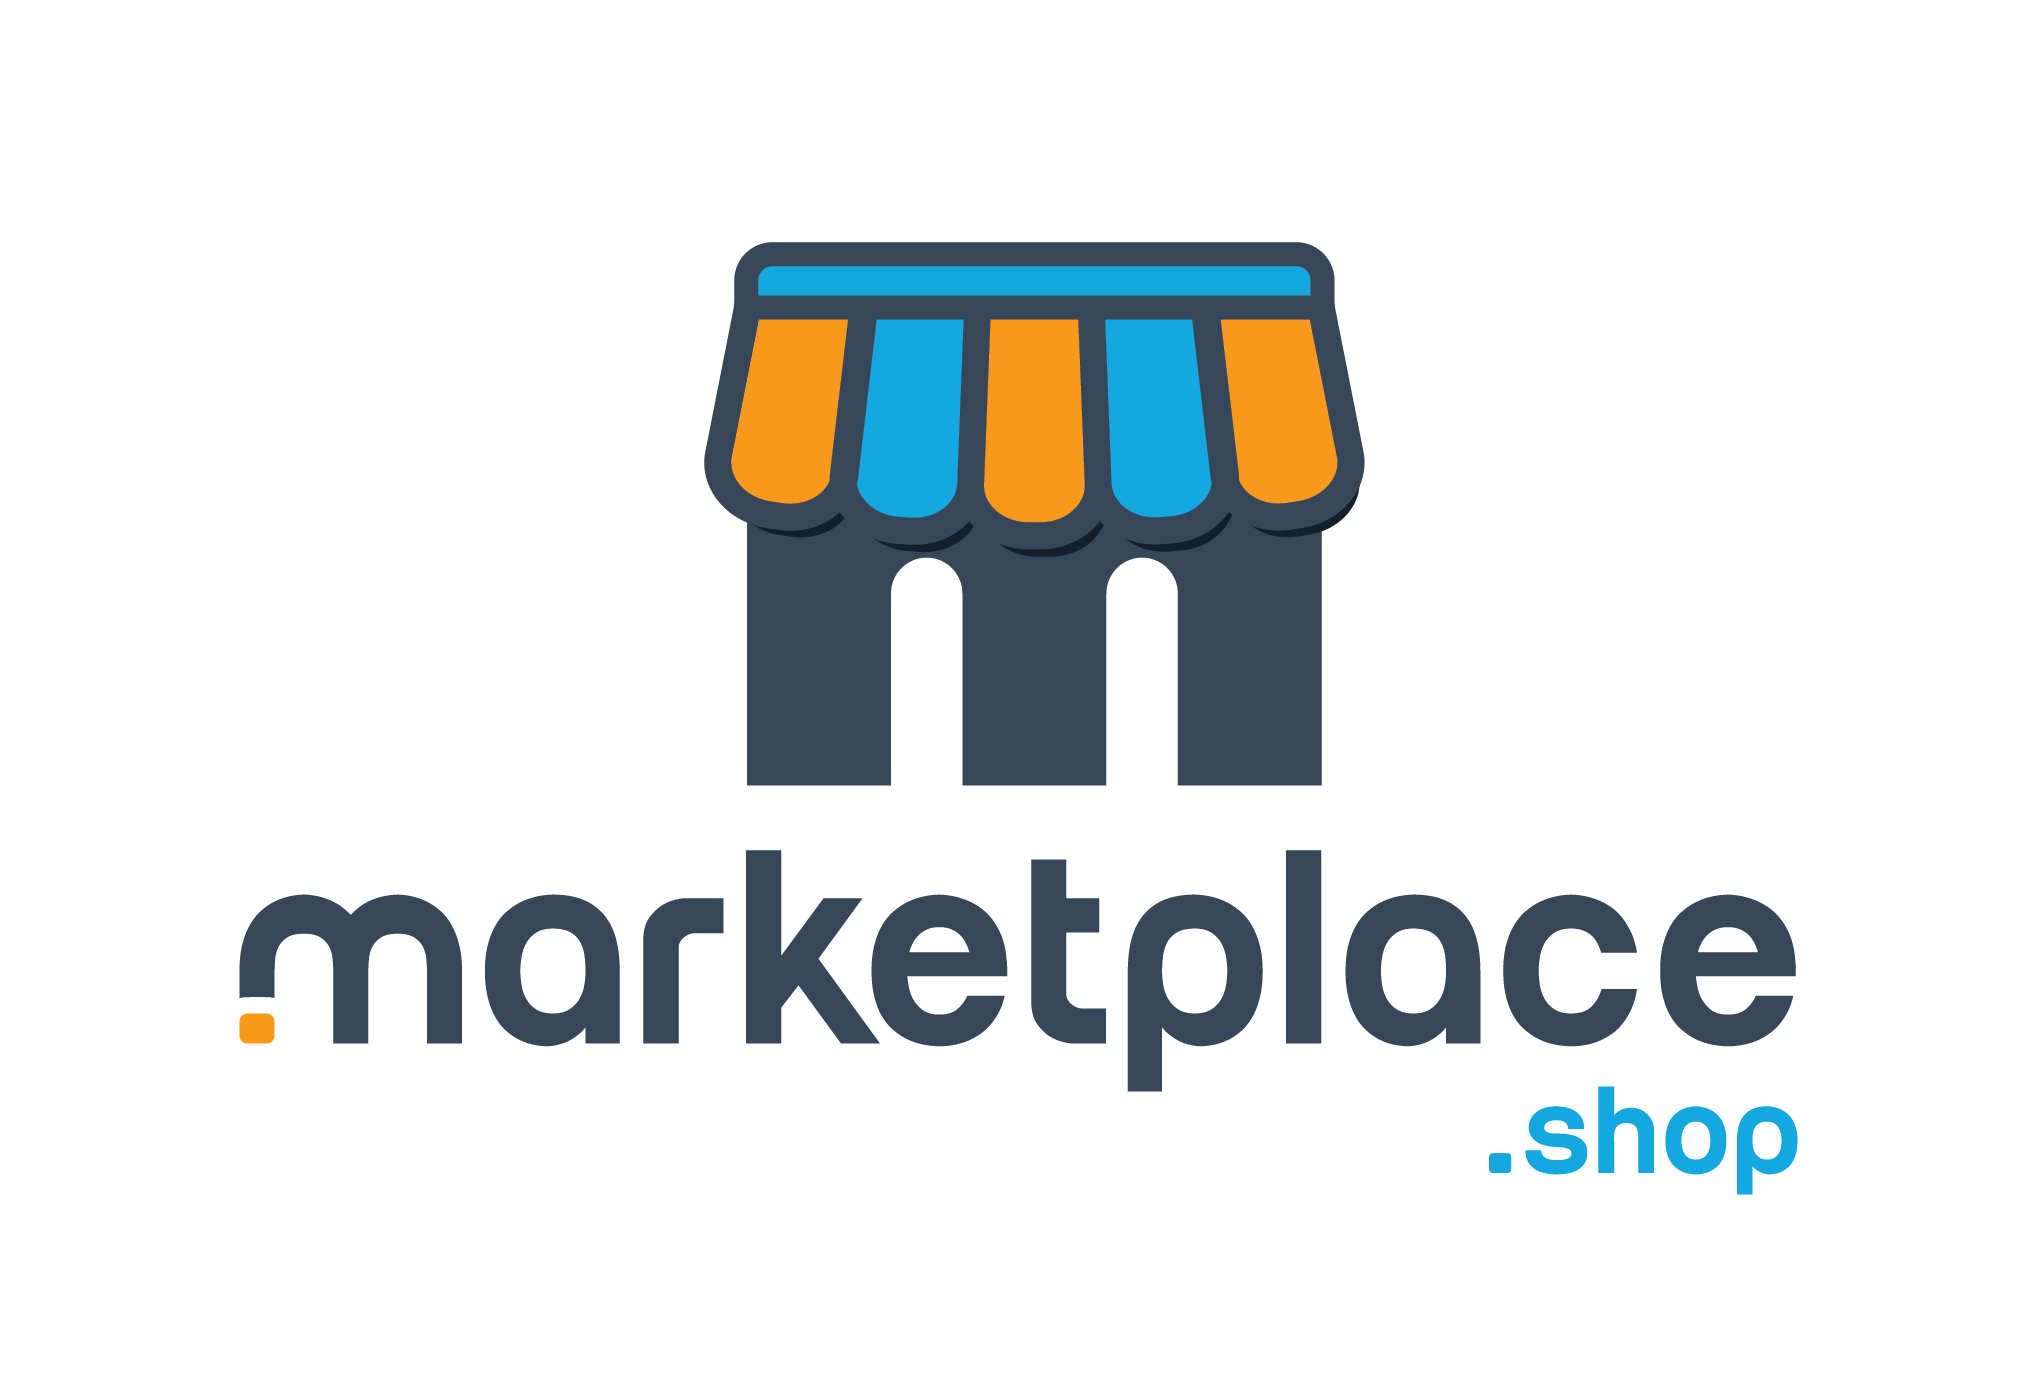 Marketplace_LG_Full_Shop@2x.png